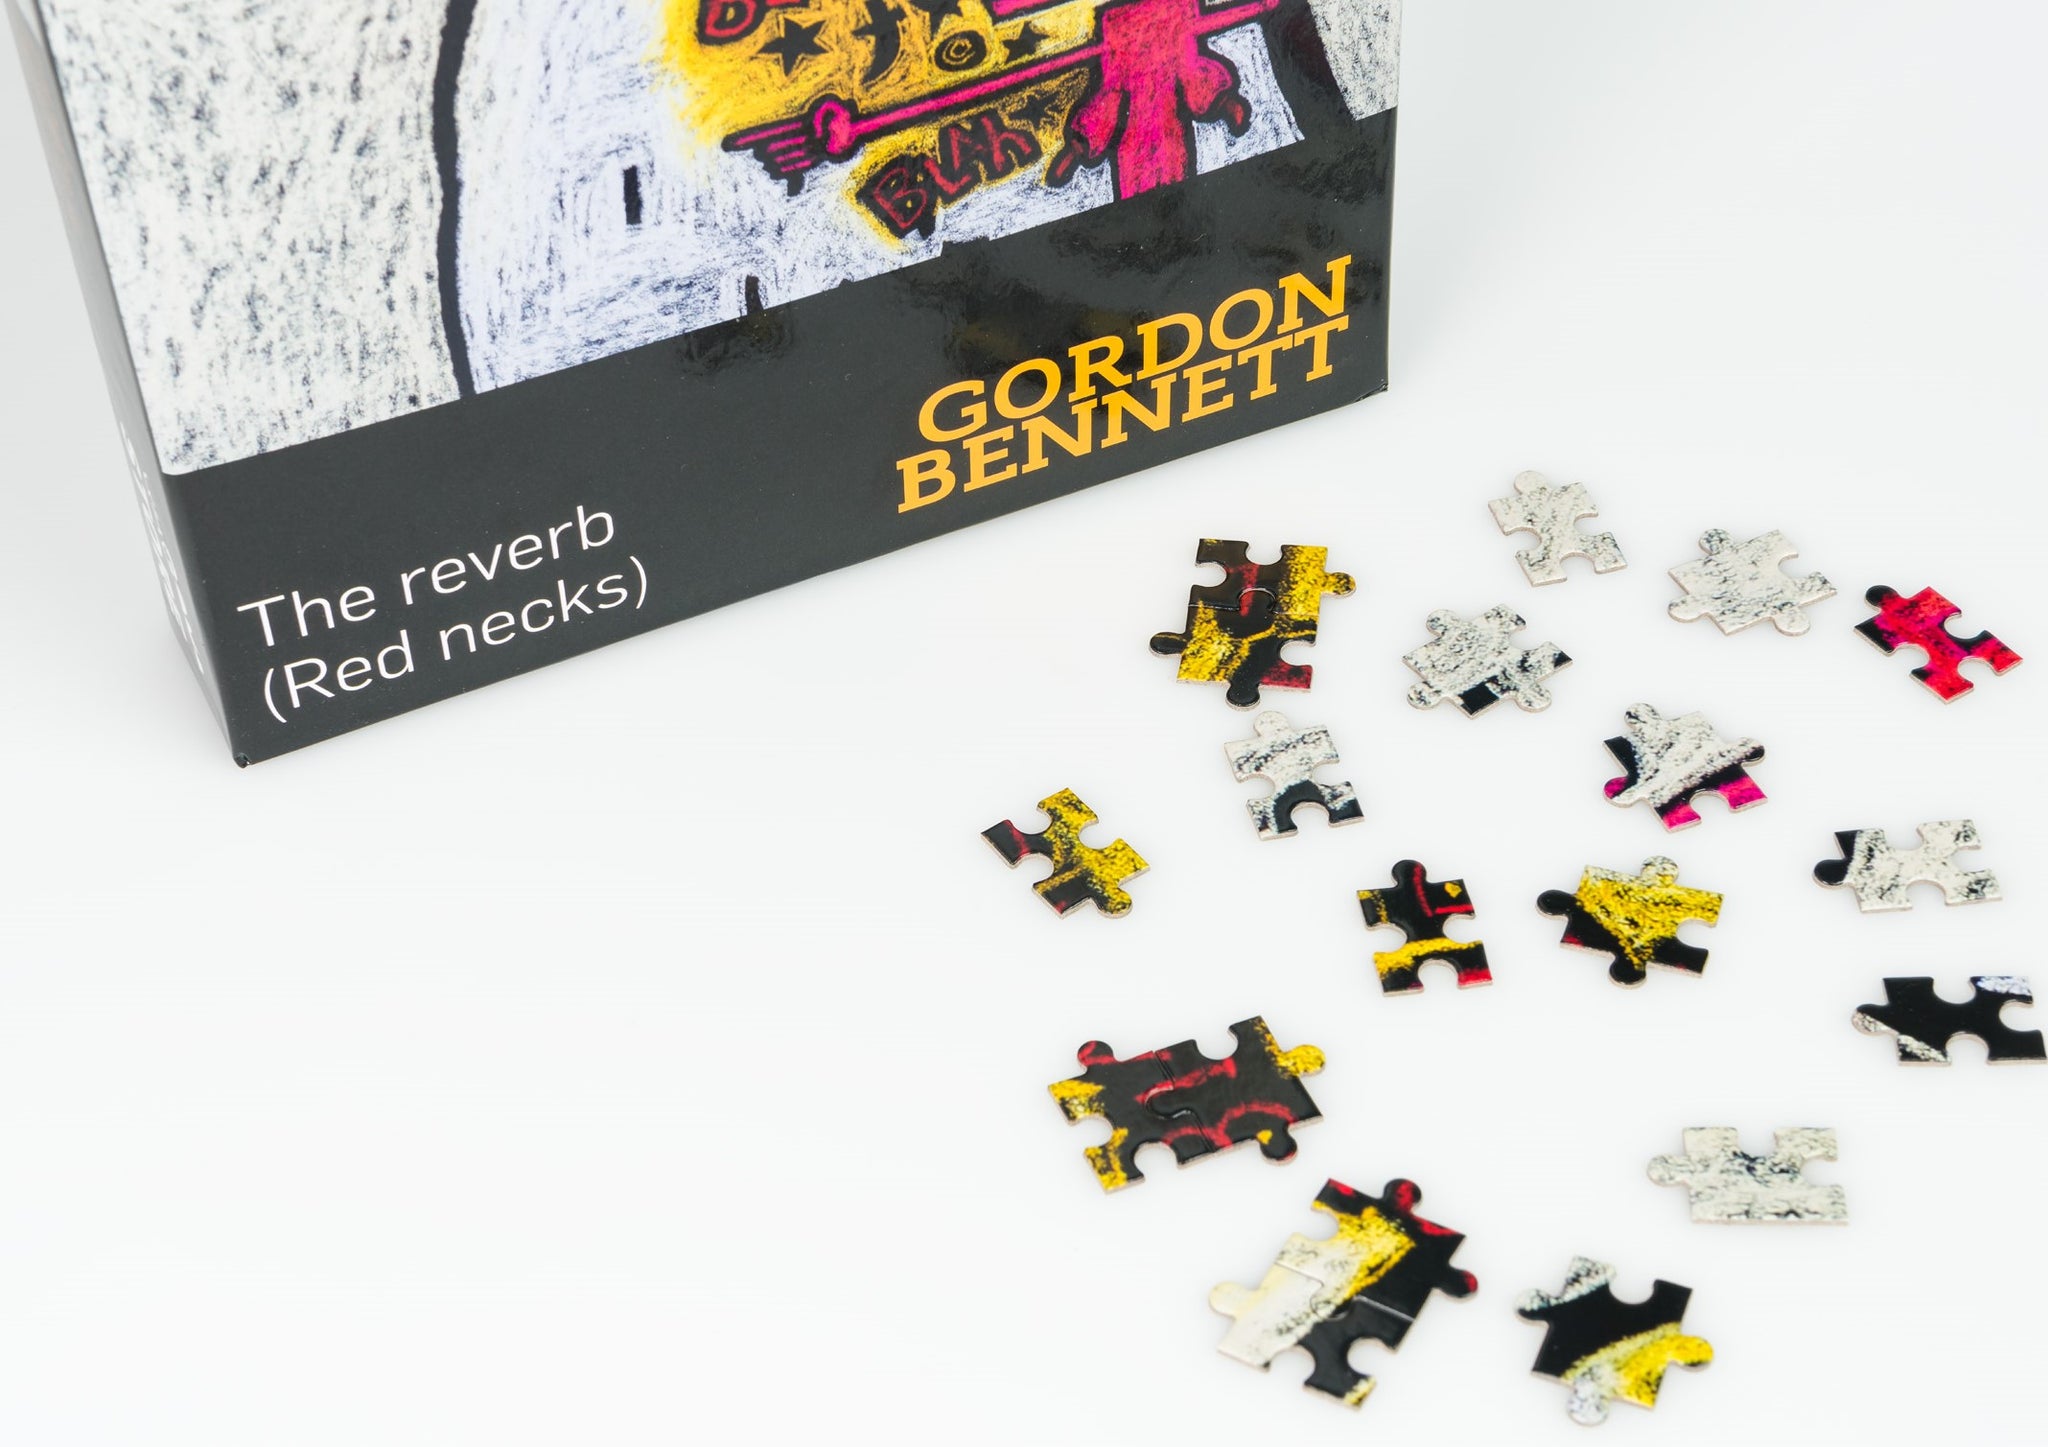 Reverb (Red necks) Jigsaw Puzzle - Gordon Bennett